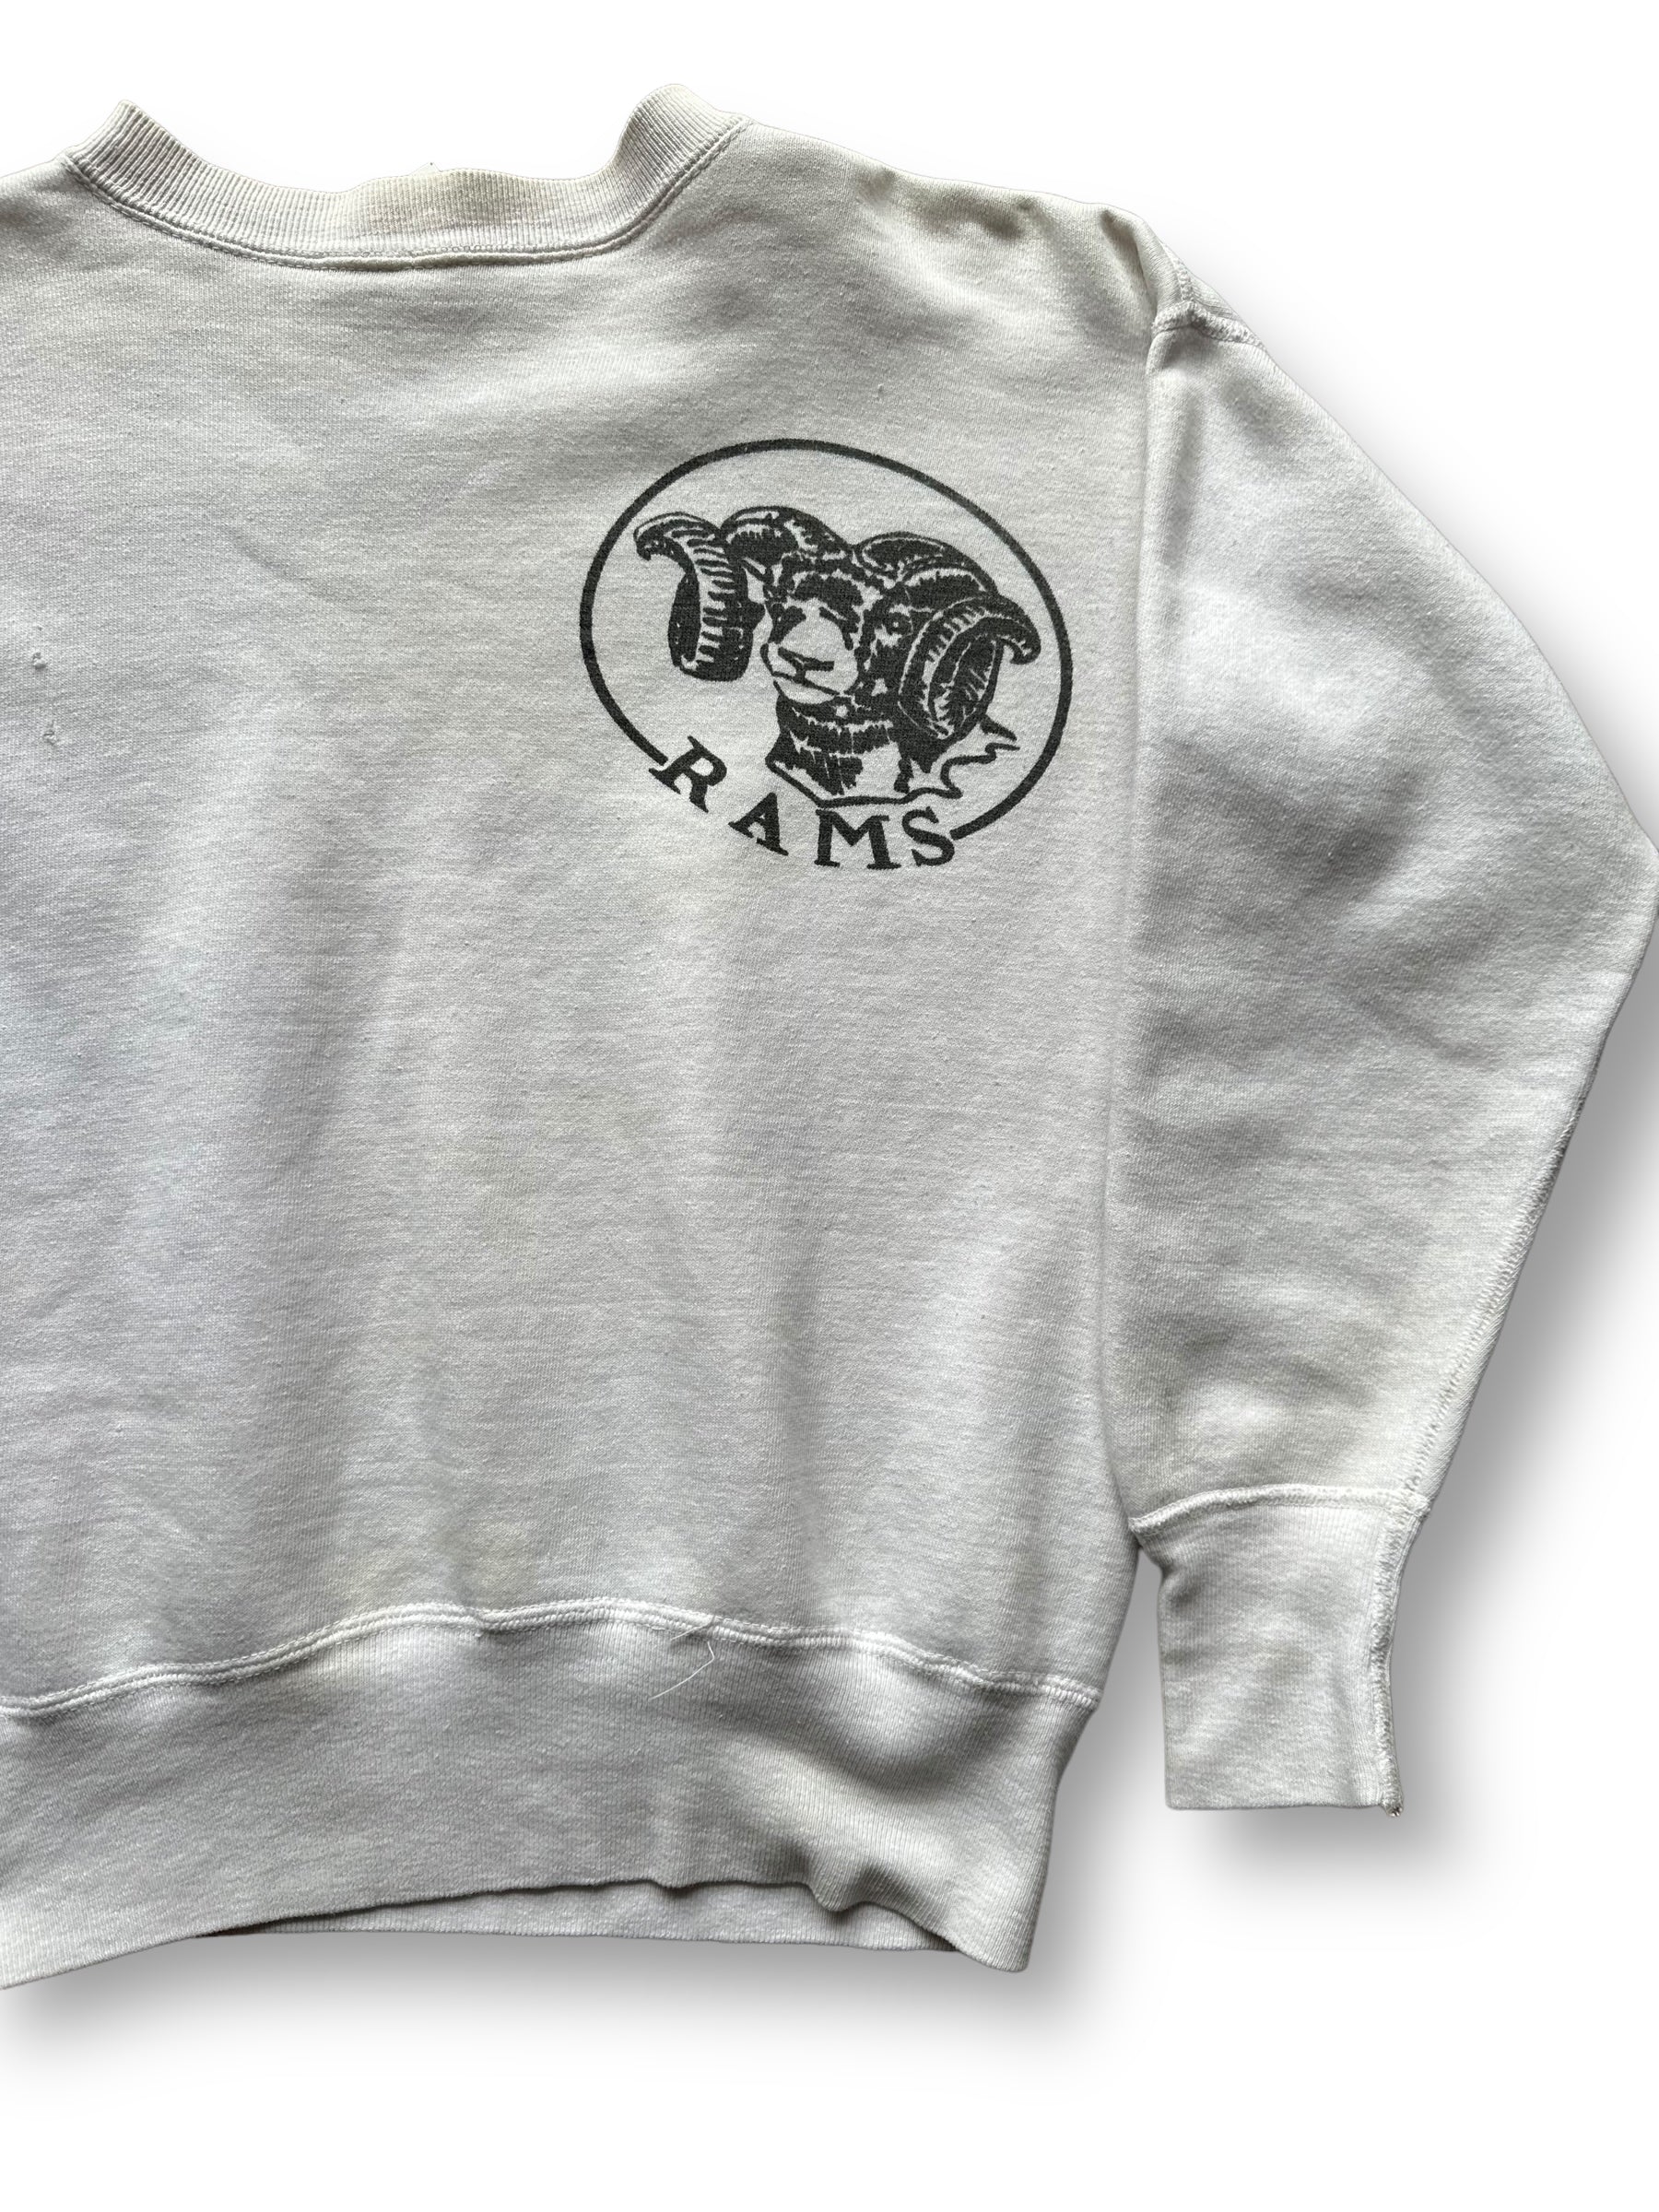 Left Front View of Vintage White Rams 1960's Era Crewneck Sweatshirt | Vintage Crewneck Seattle | Barn Owl Vintage Clothing